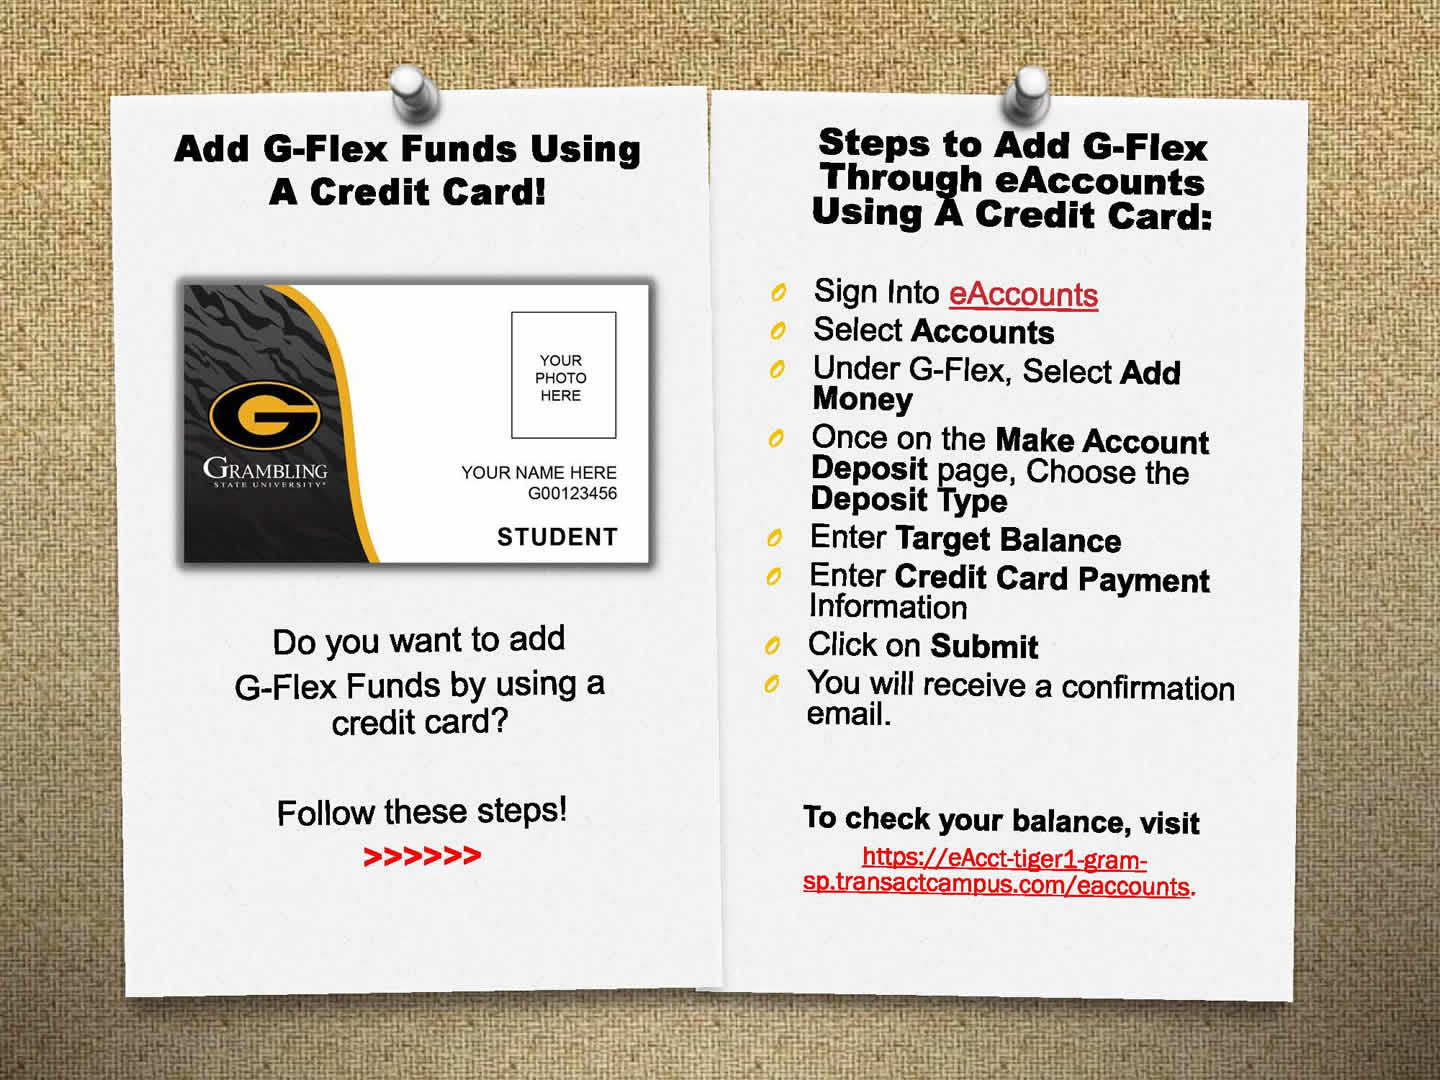 Add G-Flex Funds Using  A Credit Card flyer